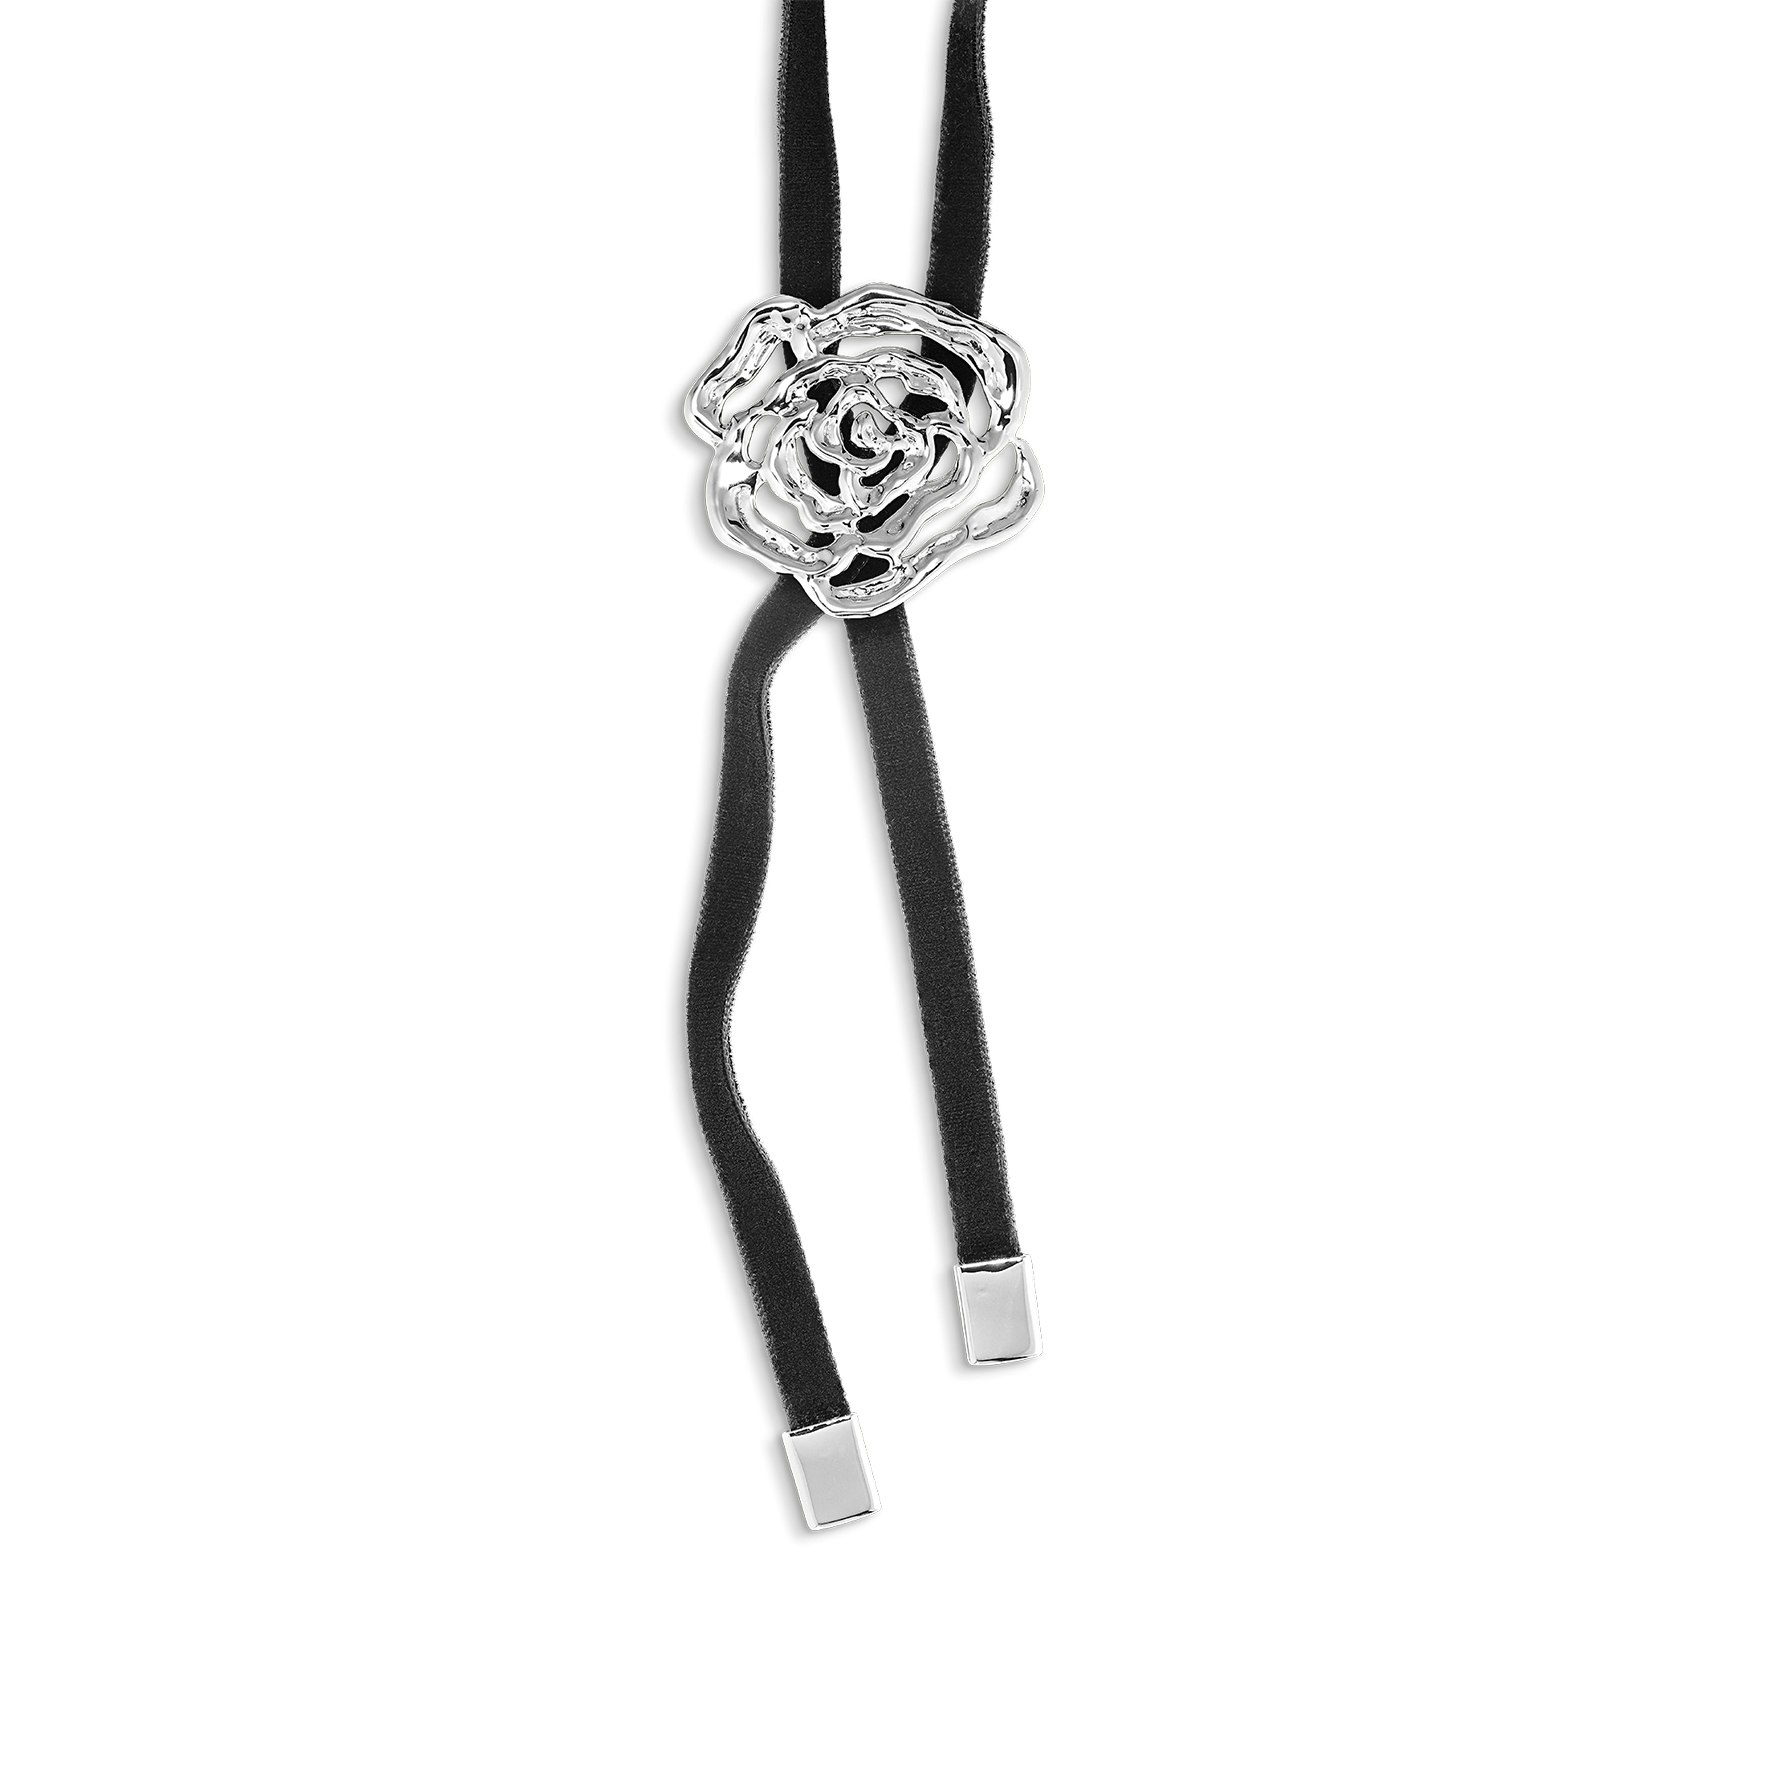 Rosle Bolo Tie Necklace von Jane Kønig in Silber Sterling 925